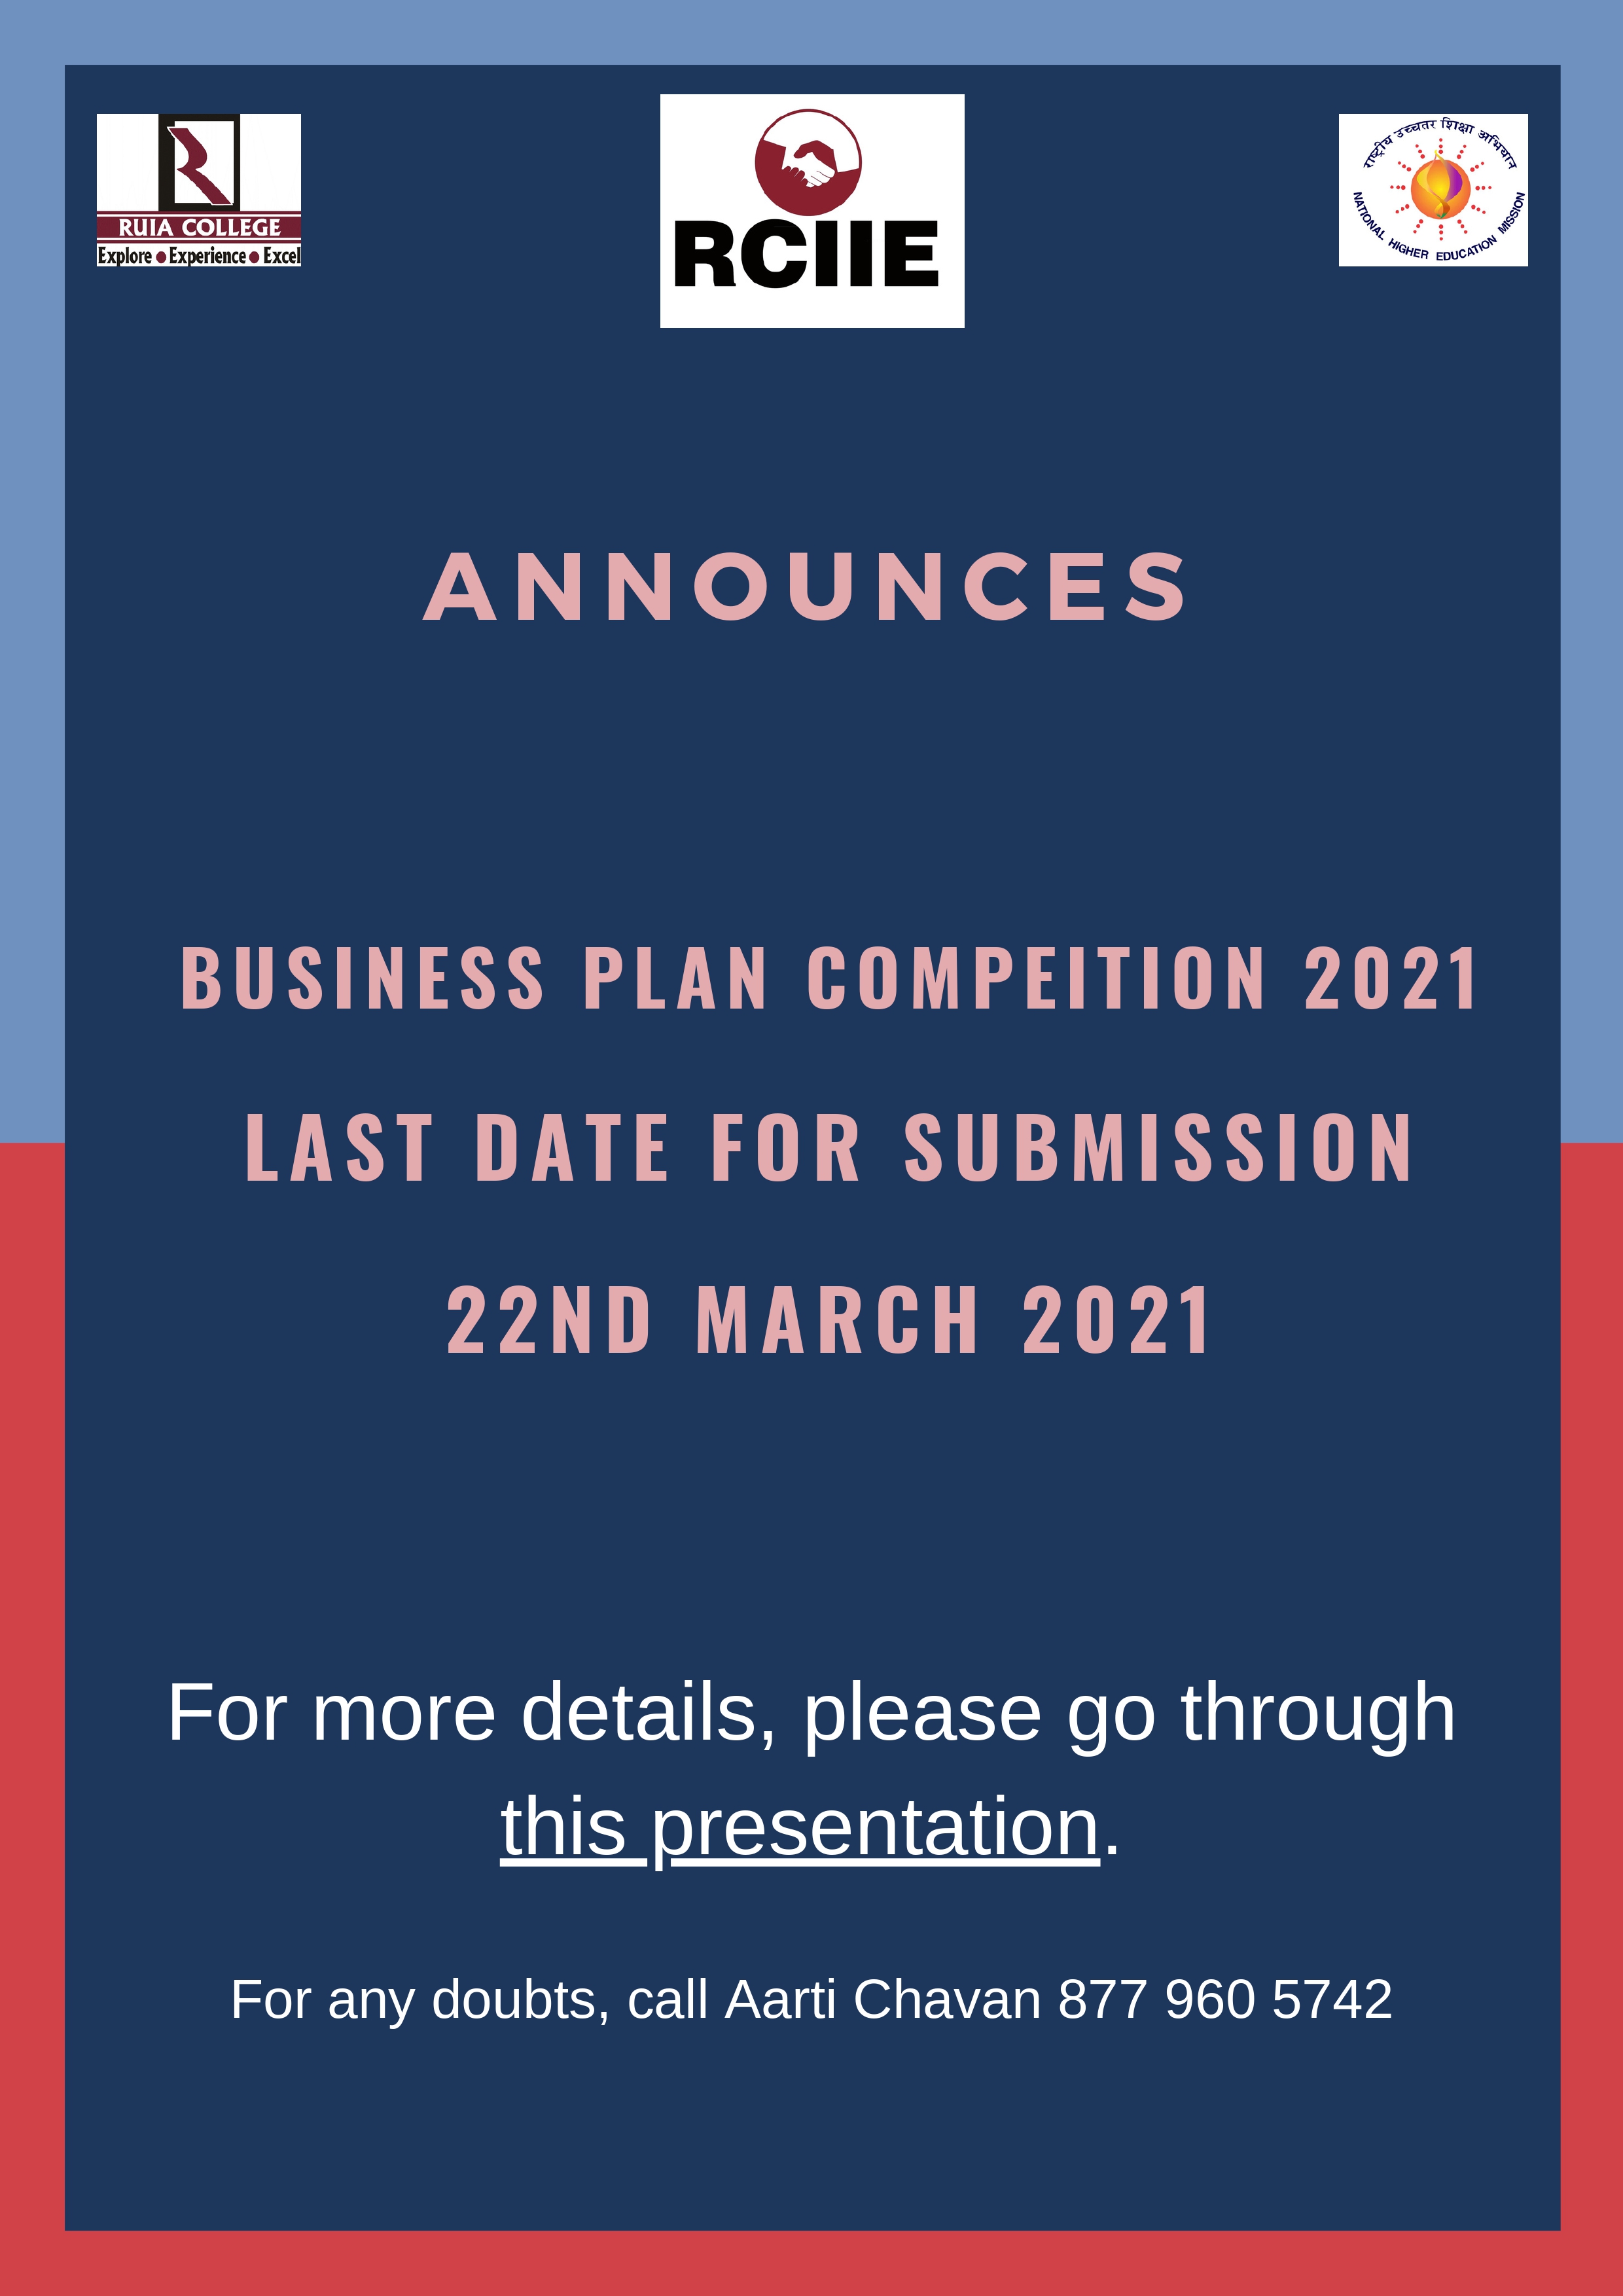 RCIIE announces Business Plan Competition 2021